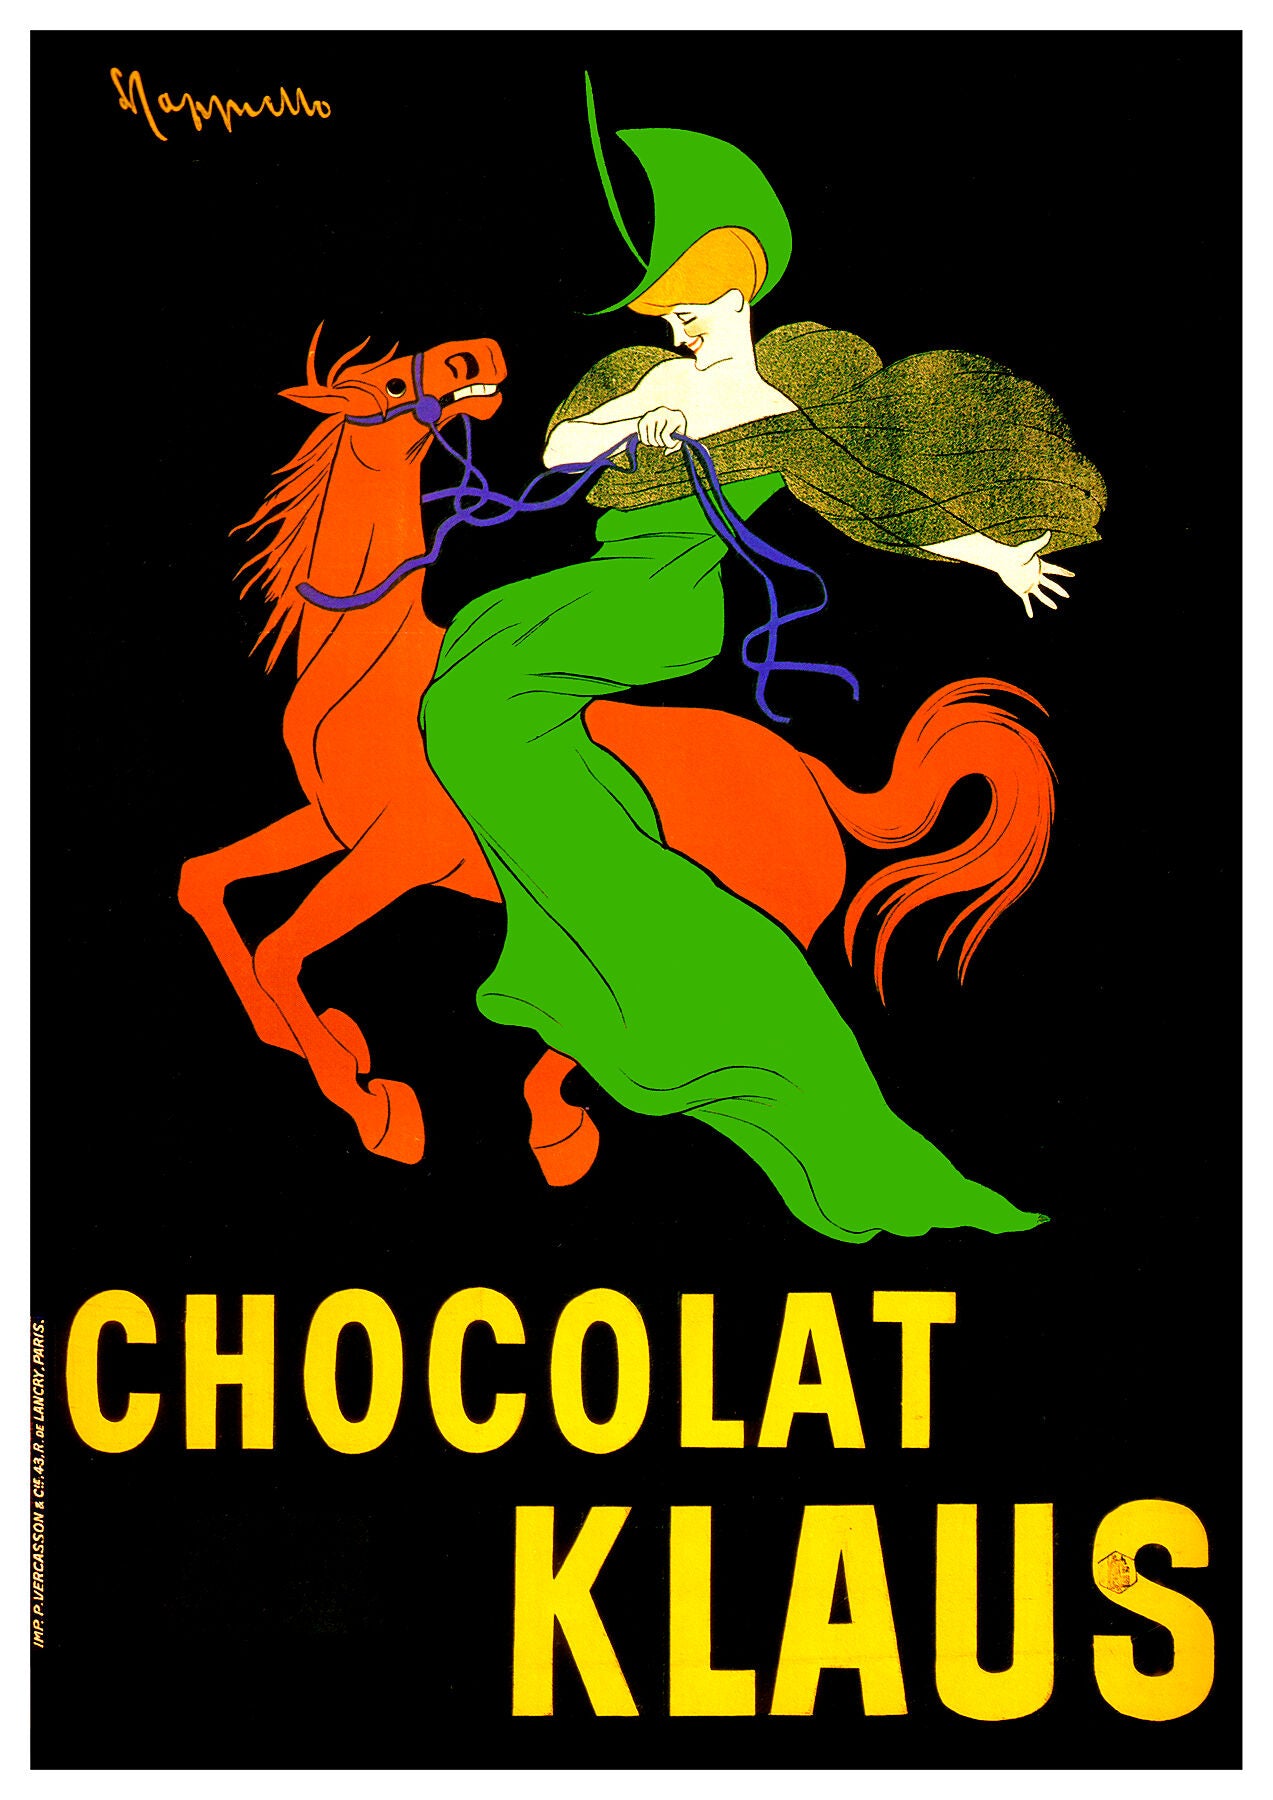 Chocolat Klaus poster by Leonetto Cappiello